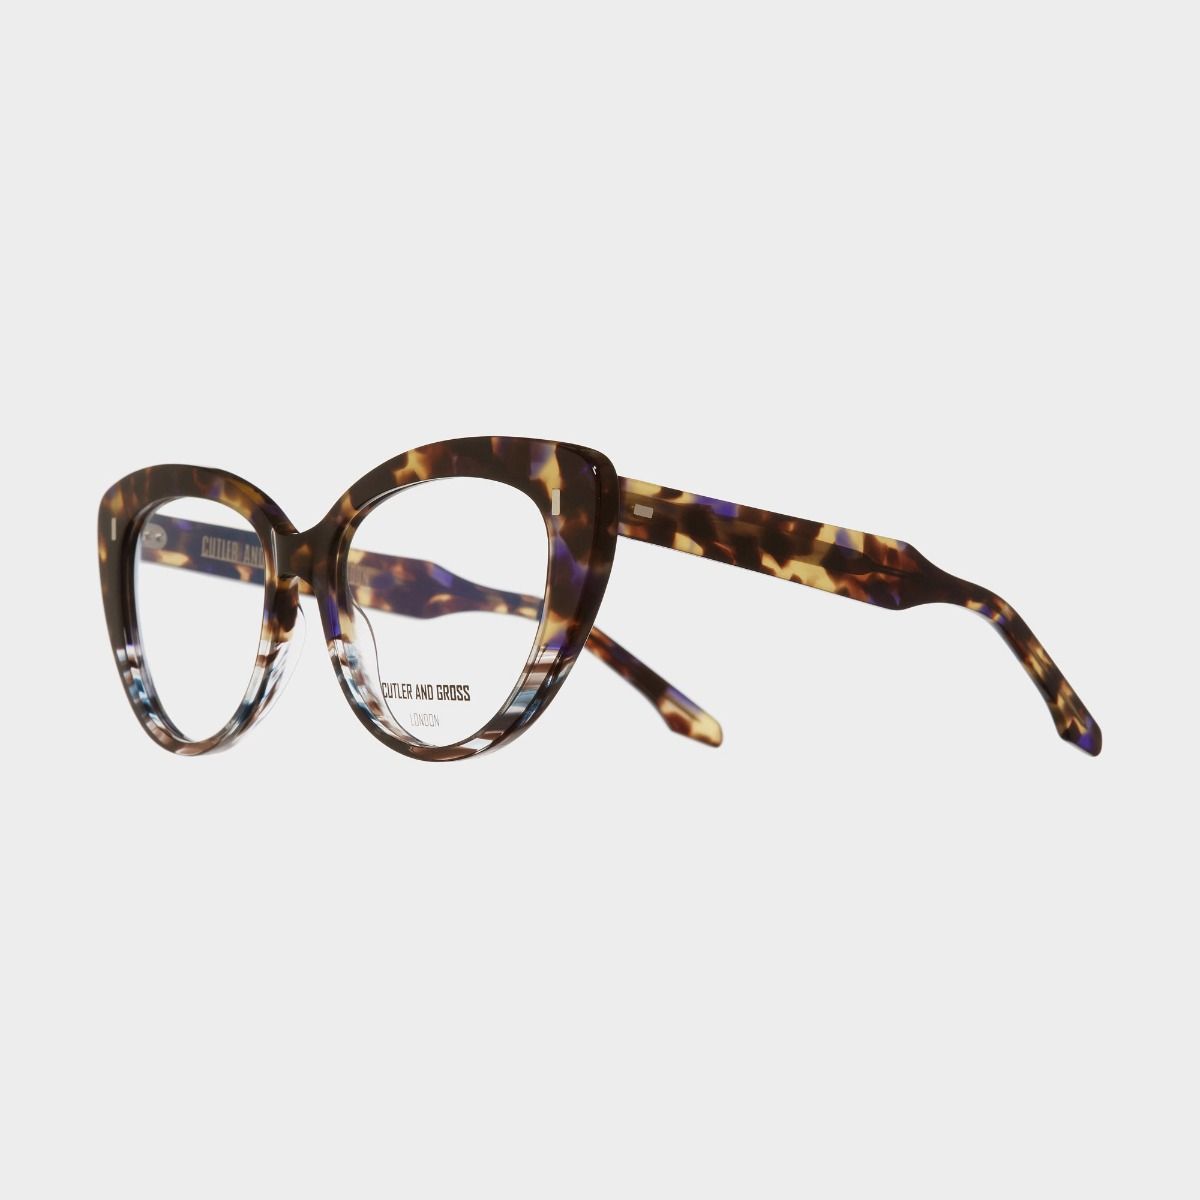 Cutler and Gross, 1350 Optical Cat-Eye Glasses - Woodstock Blue